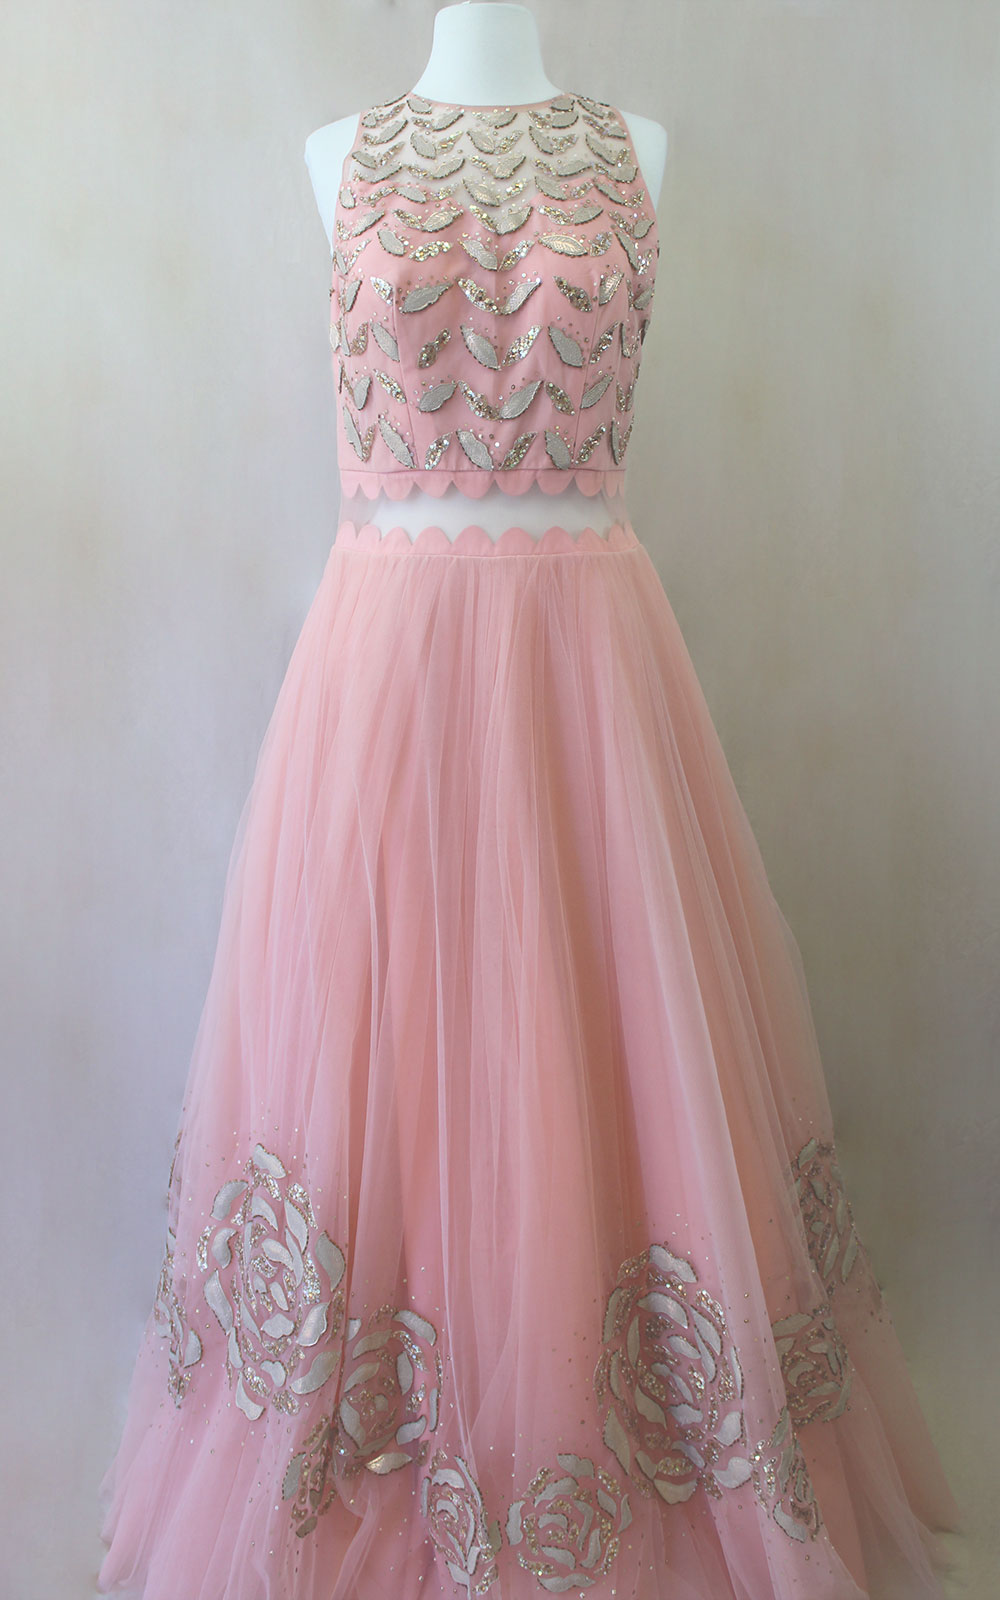 Allure Romance Style 2710 Wedding Dress 14 Sweetheart Beaded Net Layers  Skirt | eBay